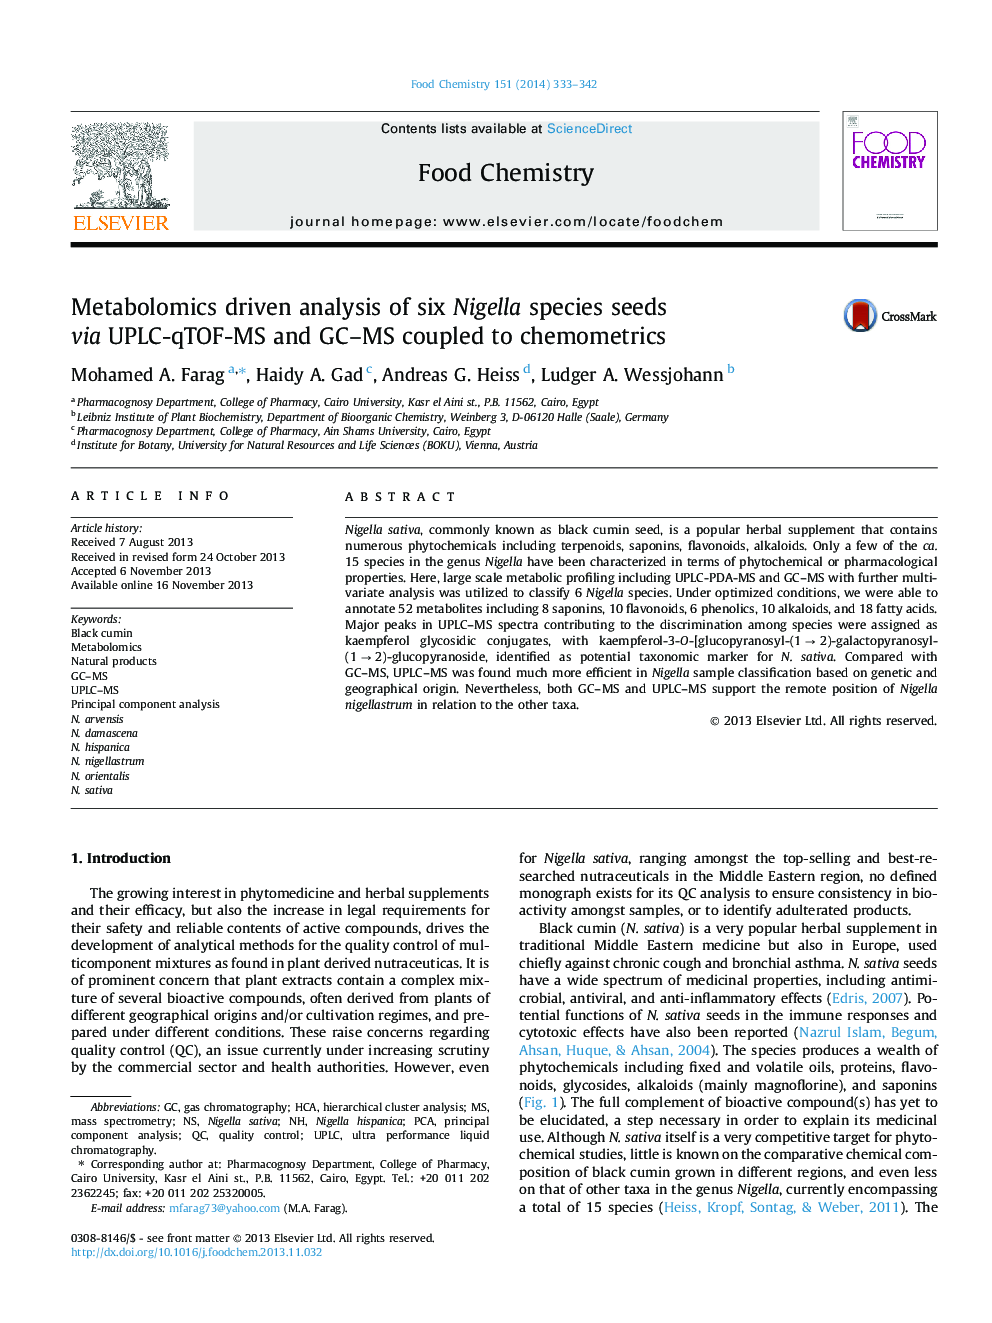 Metabolomics driven analysis of six Nigella species seeds via UPLC-qTOF-MS and GC–MS coupled to chemometrics